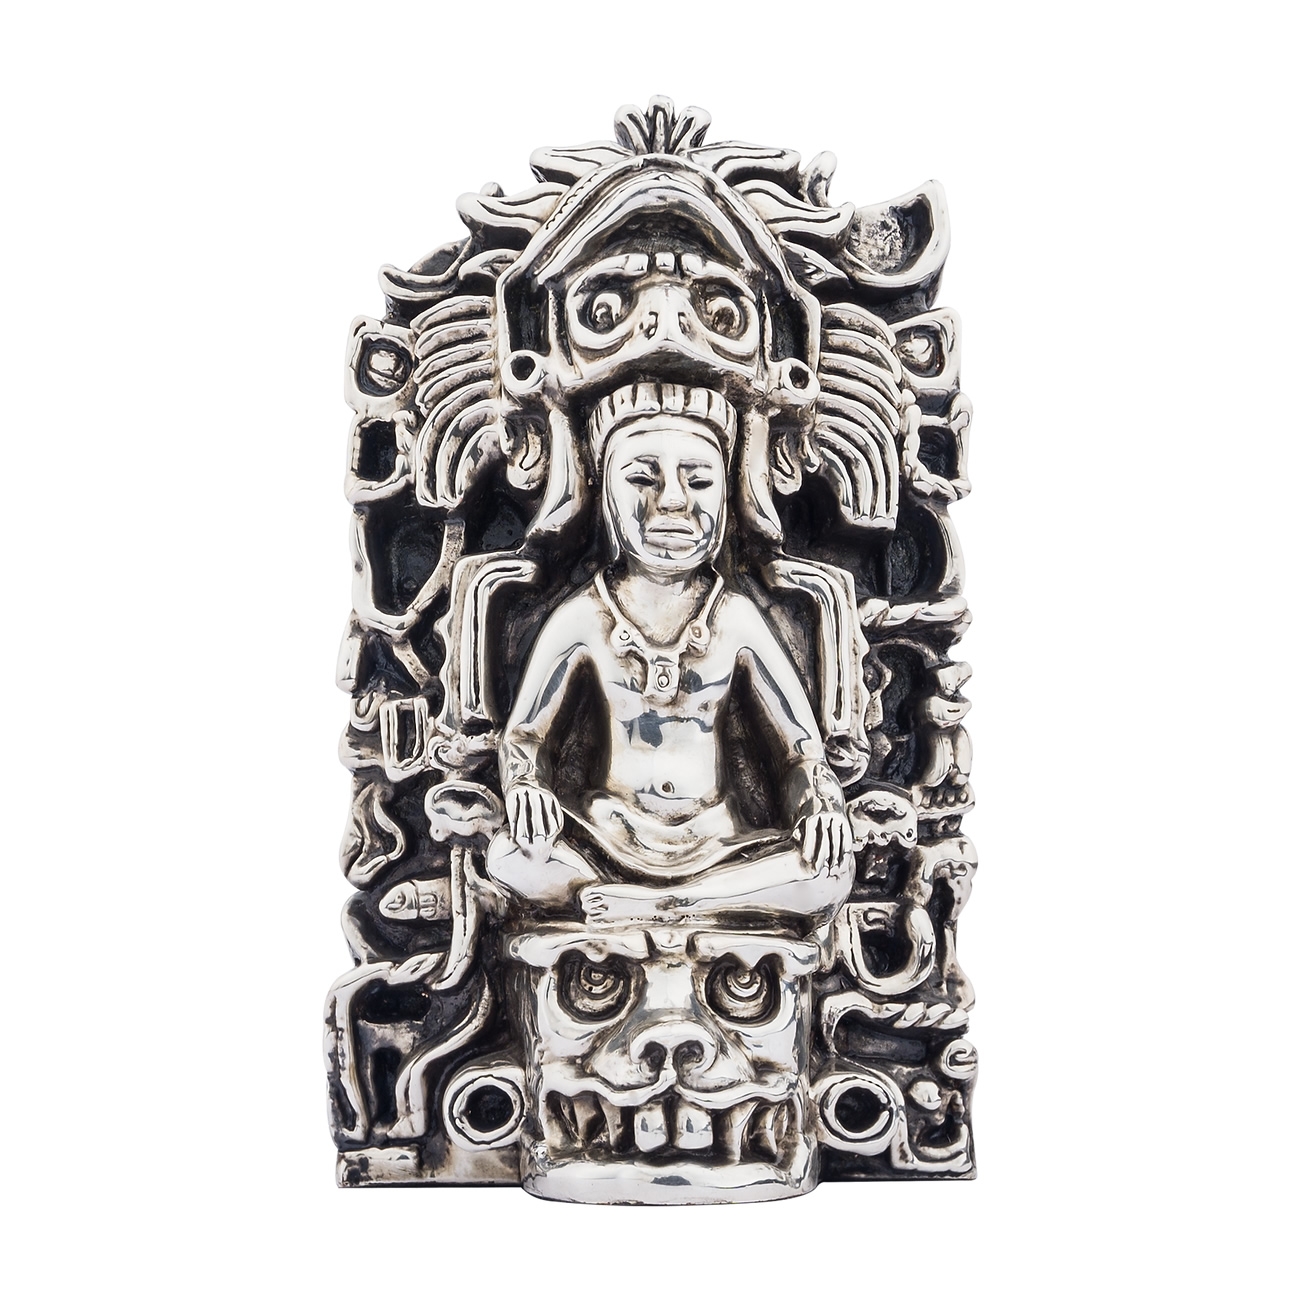 Mayan King Silver Sculpture